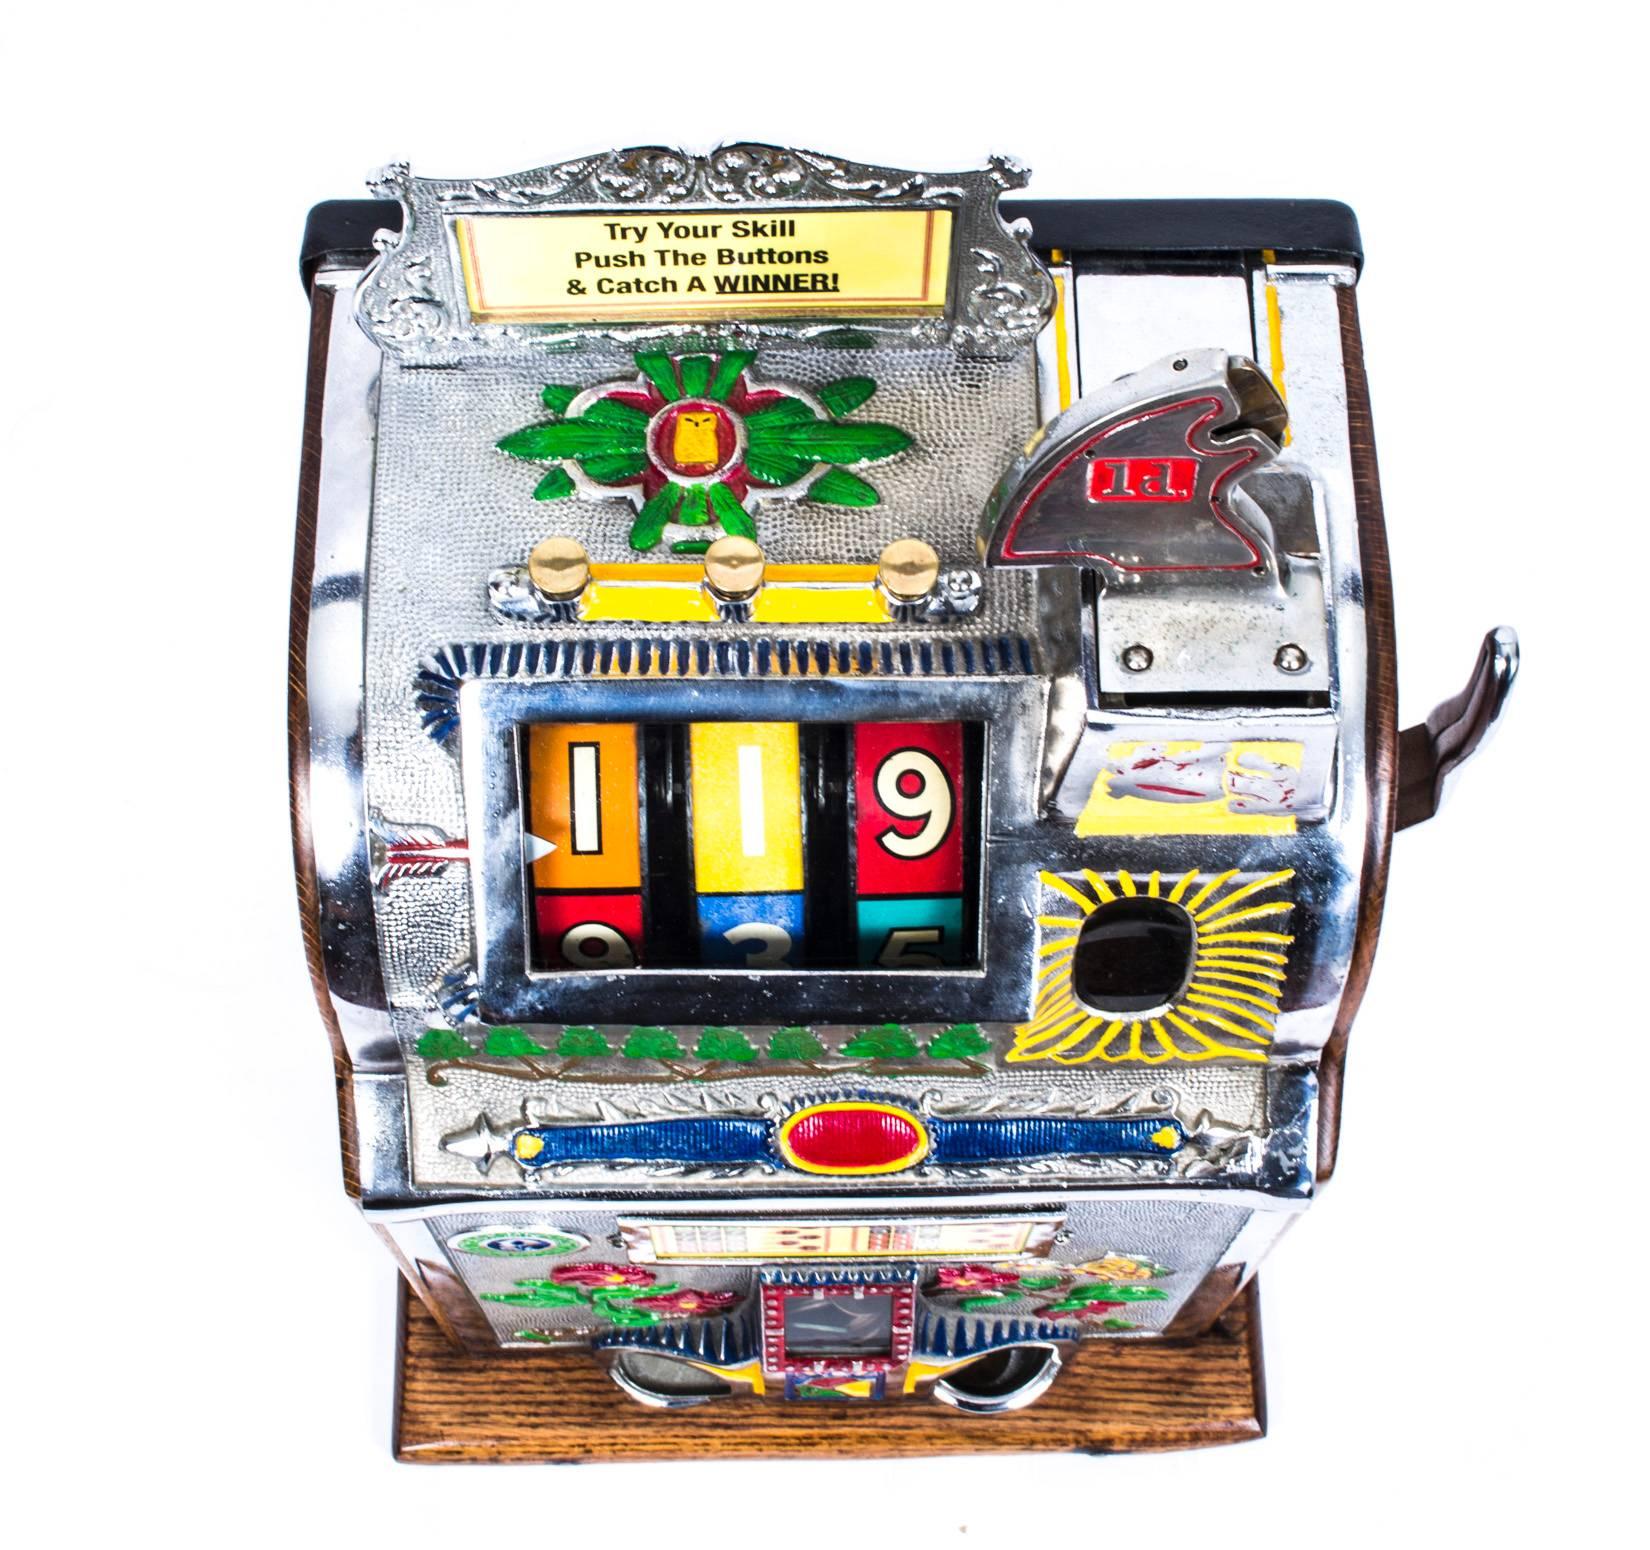 1920s slot machine